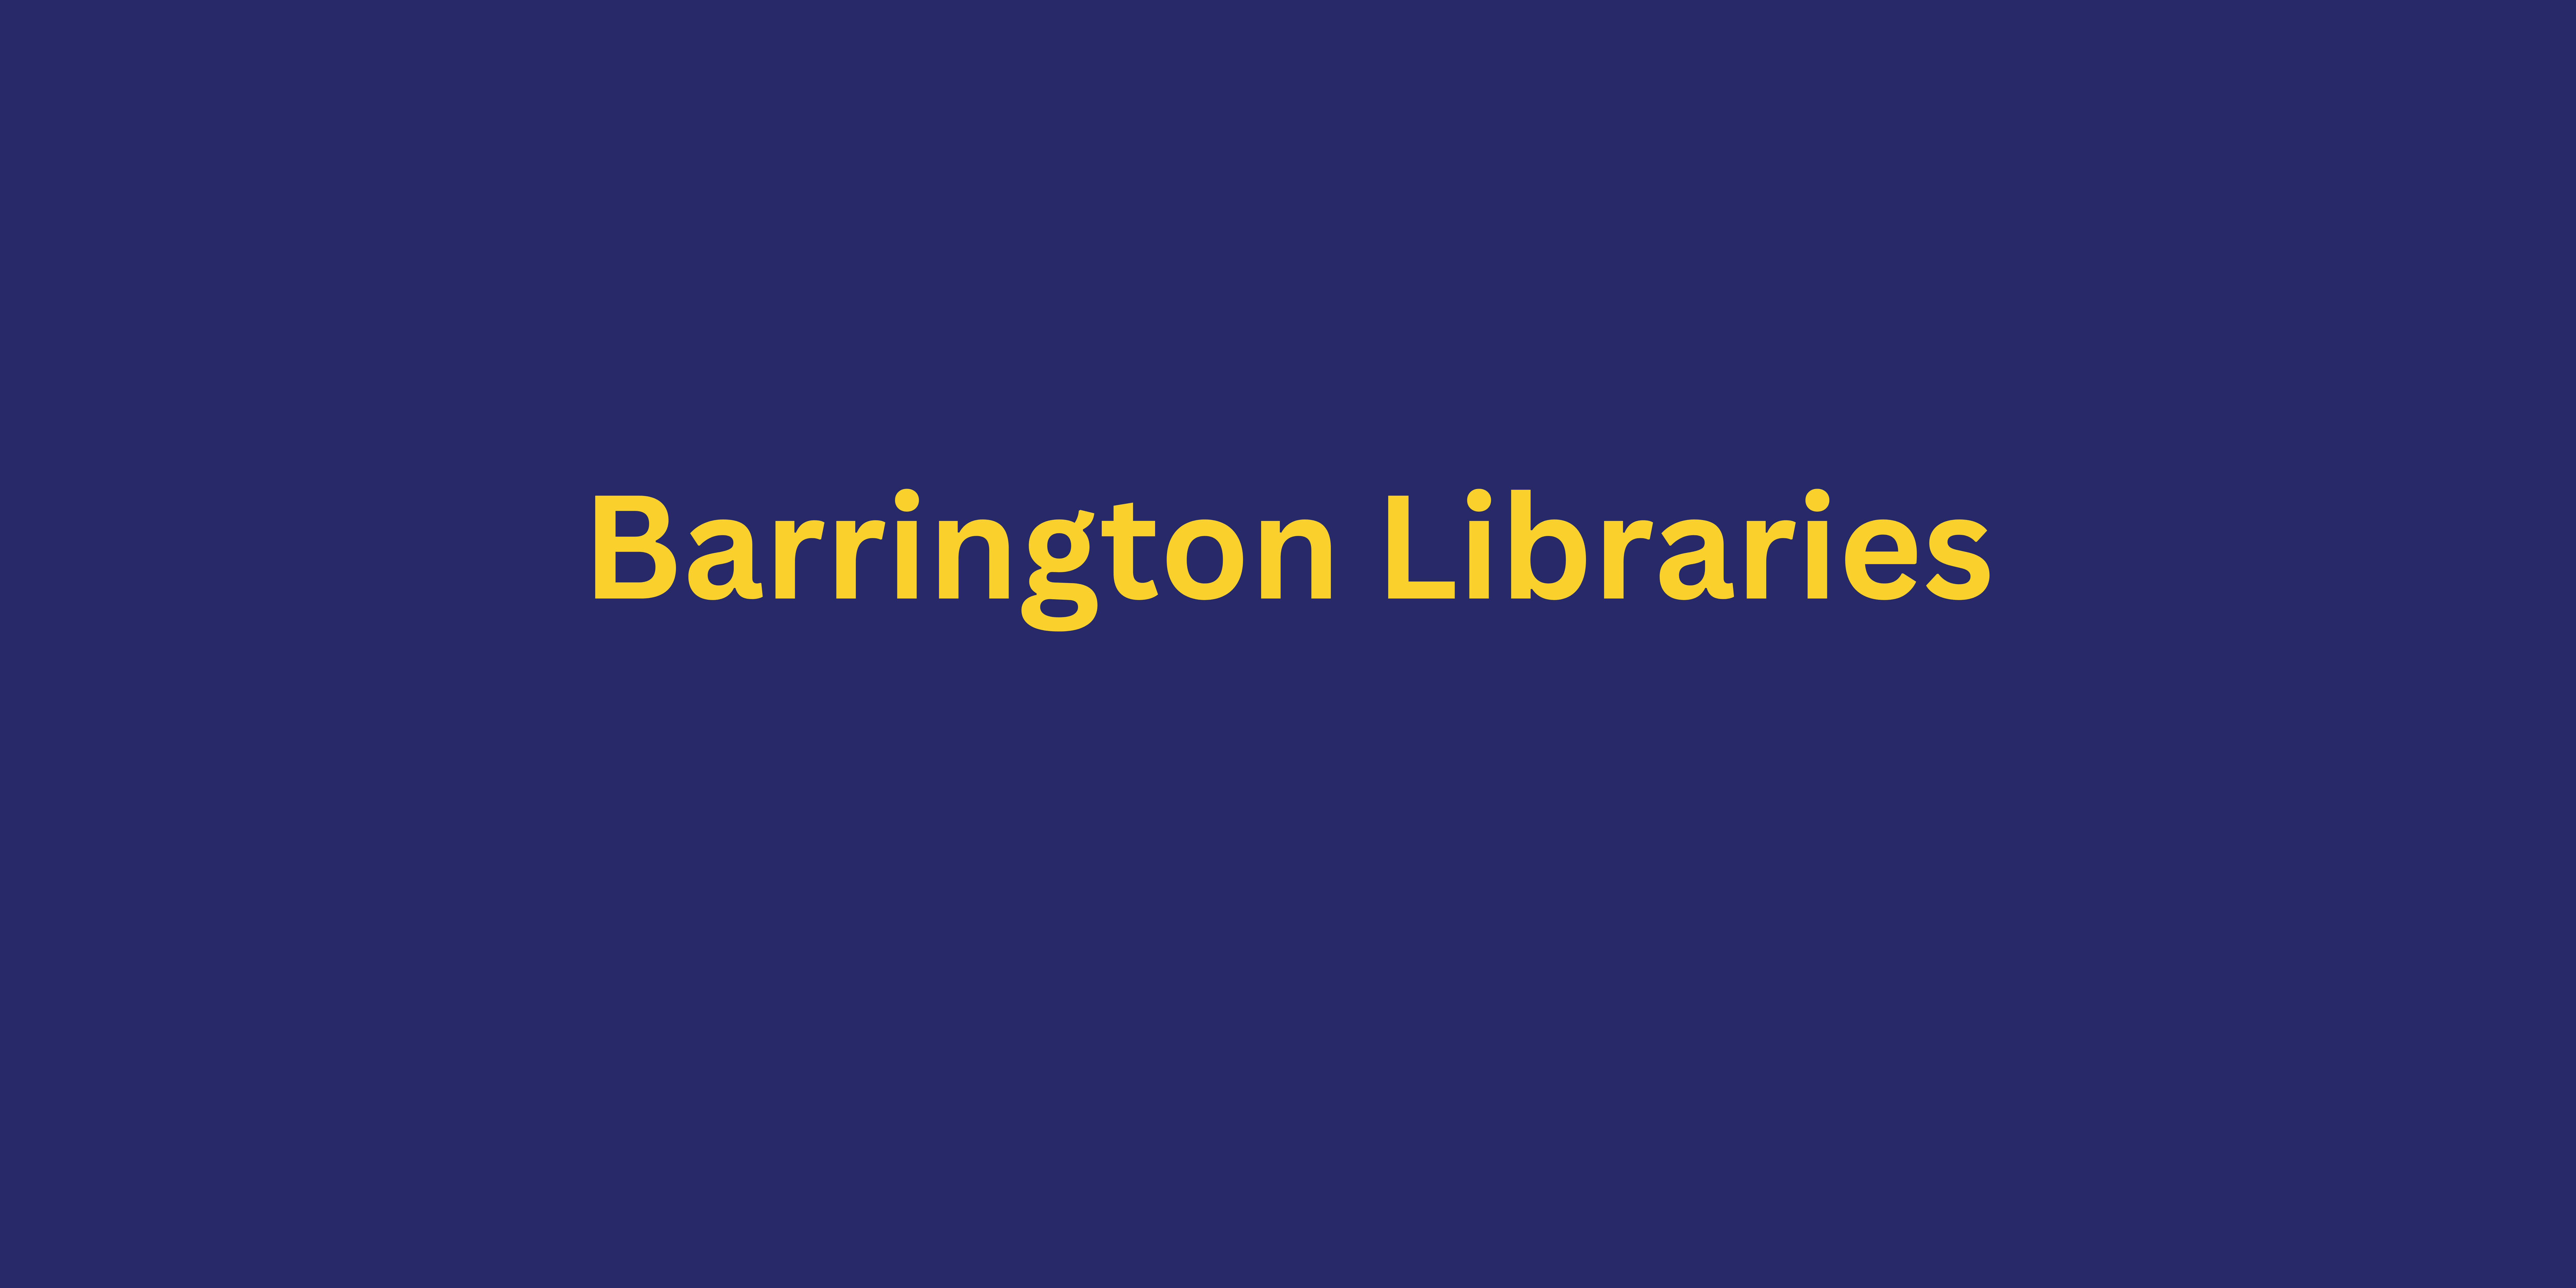 Barrington libraries